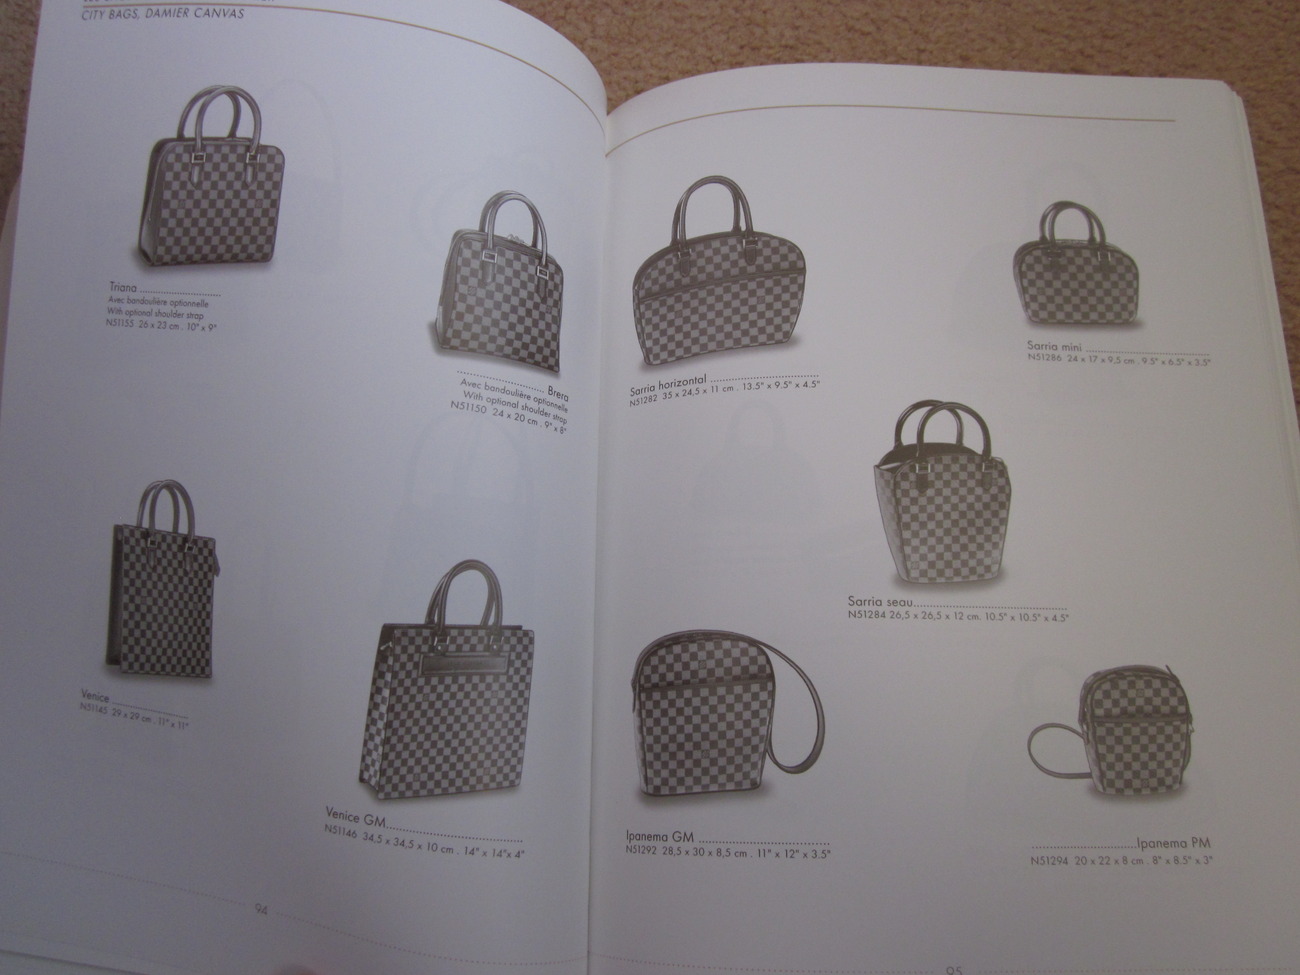  Louis  Vuitton  Catalog  copyright 2002 Catalogs